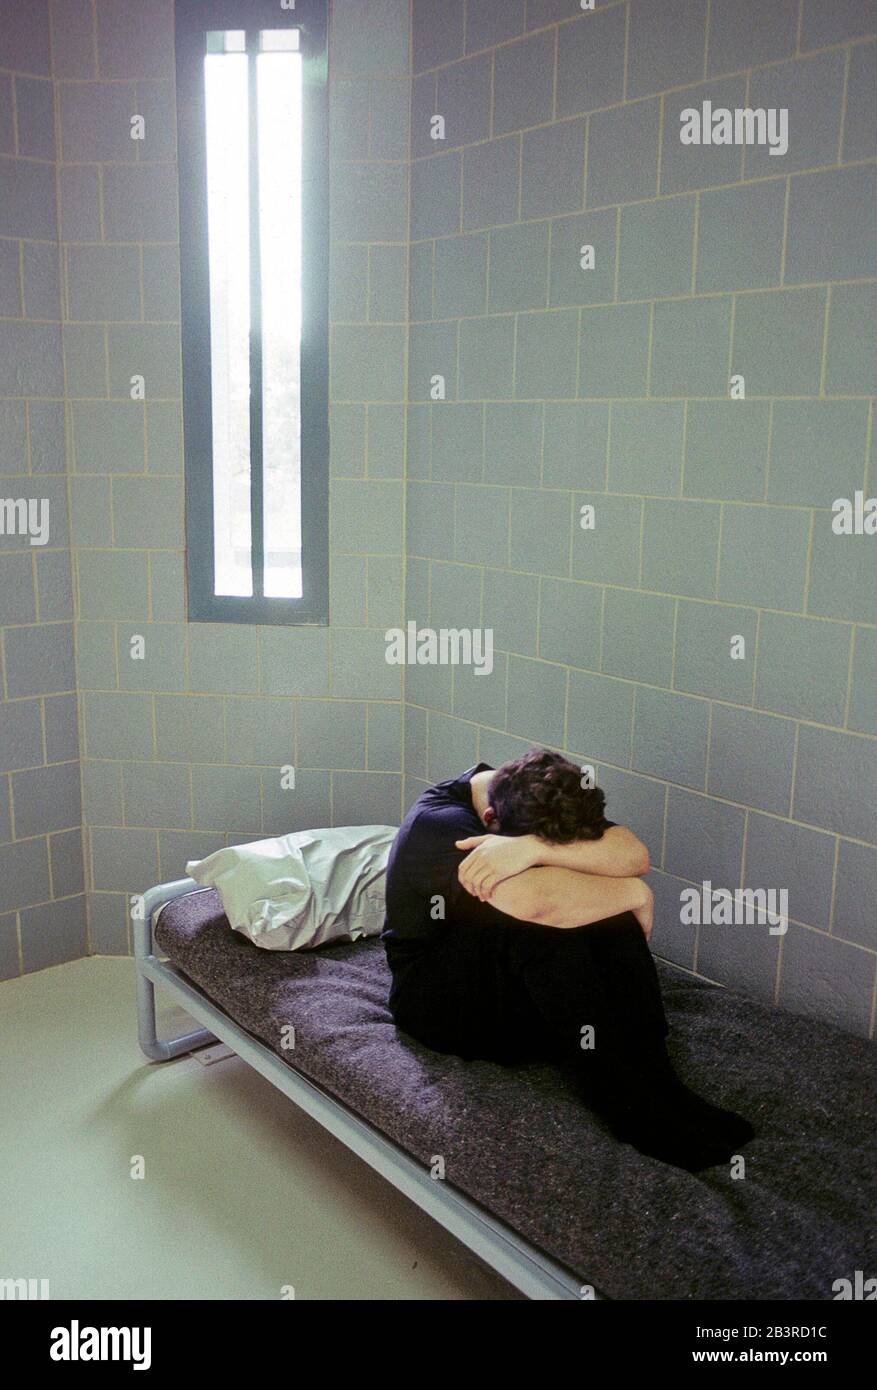 Austin, Texas Inmate (model) in juvenile detention center cell. ©Bob